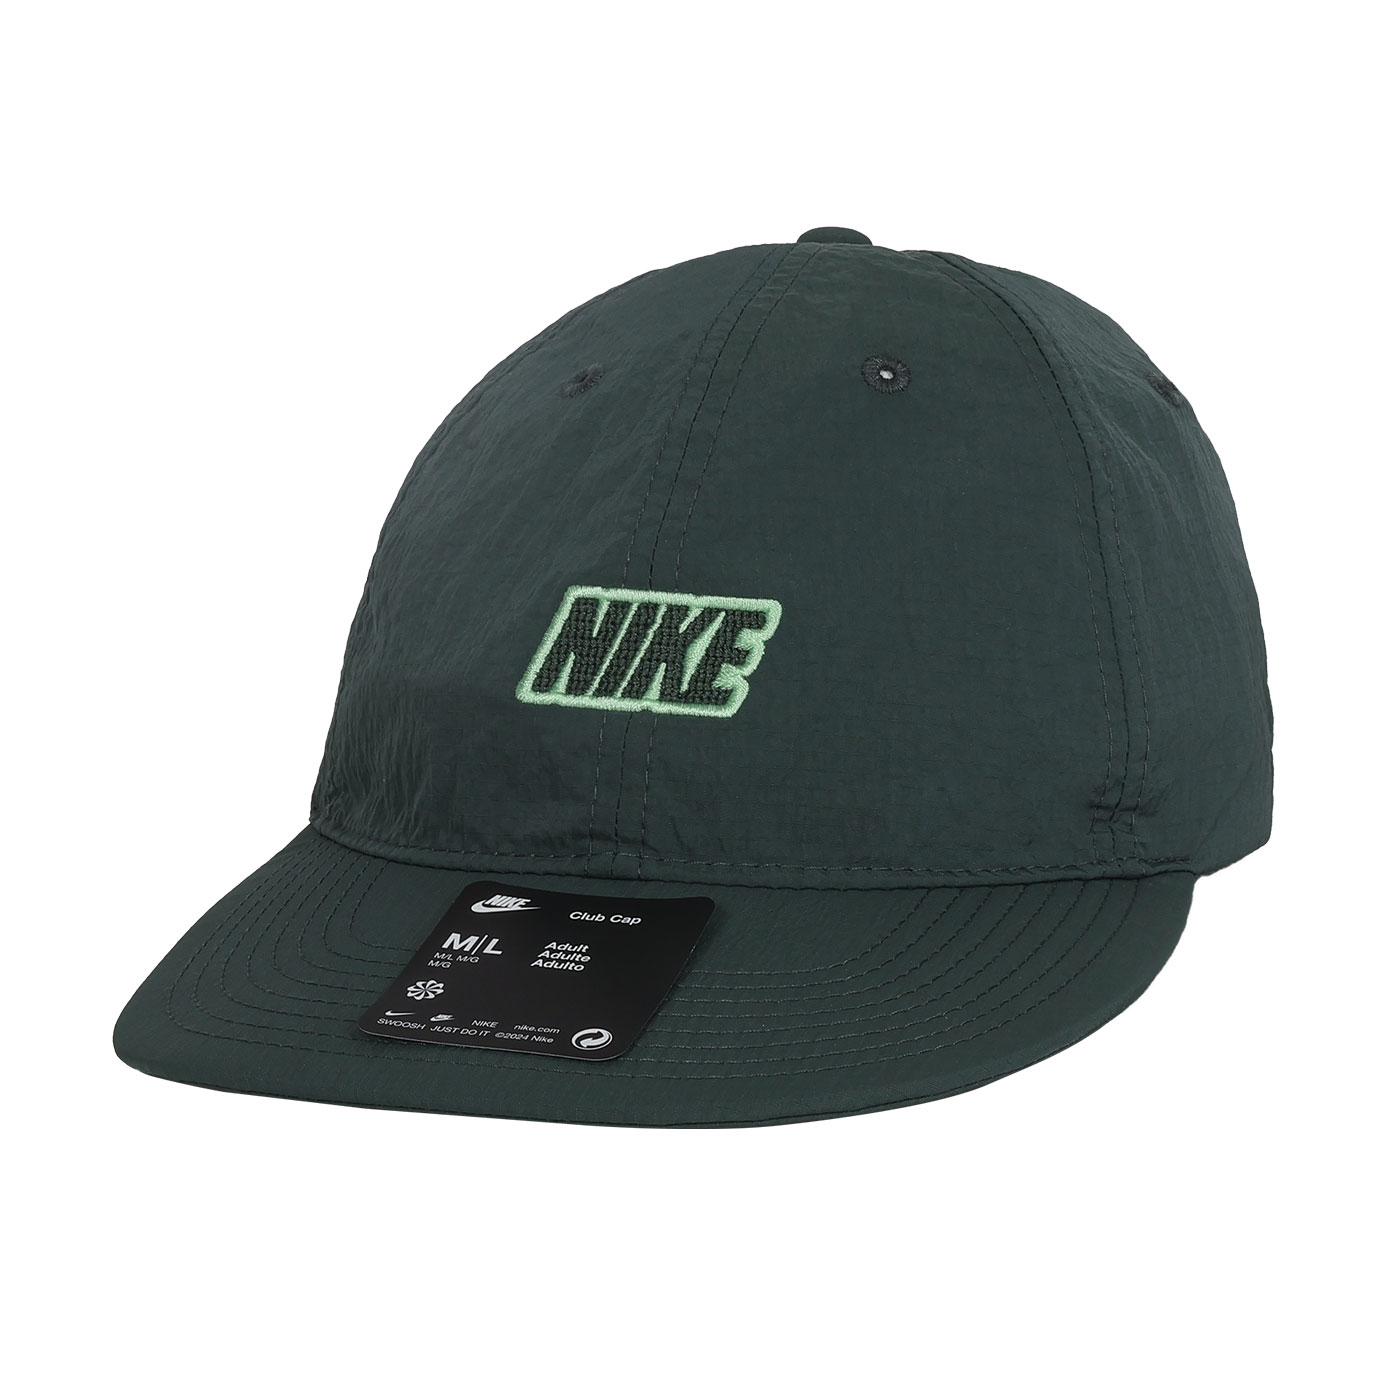 NIKE 運動帽  FQ3275-338 - 深綠淺綠